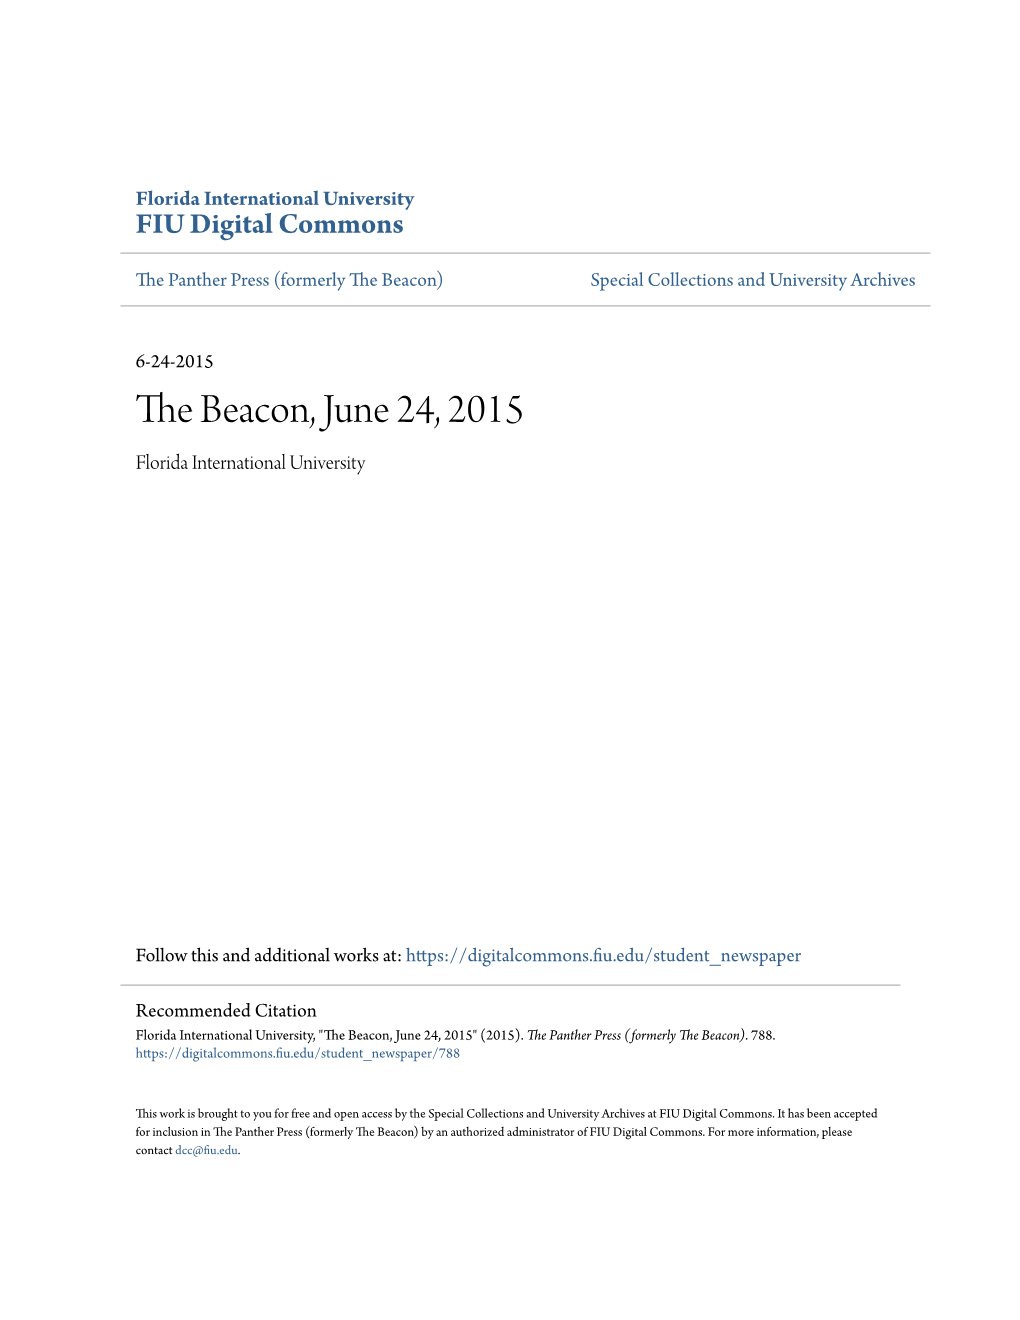 The Beacon, June 24, 2015 Florida International University